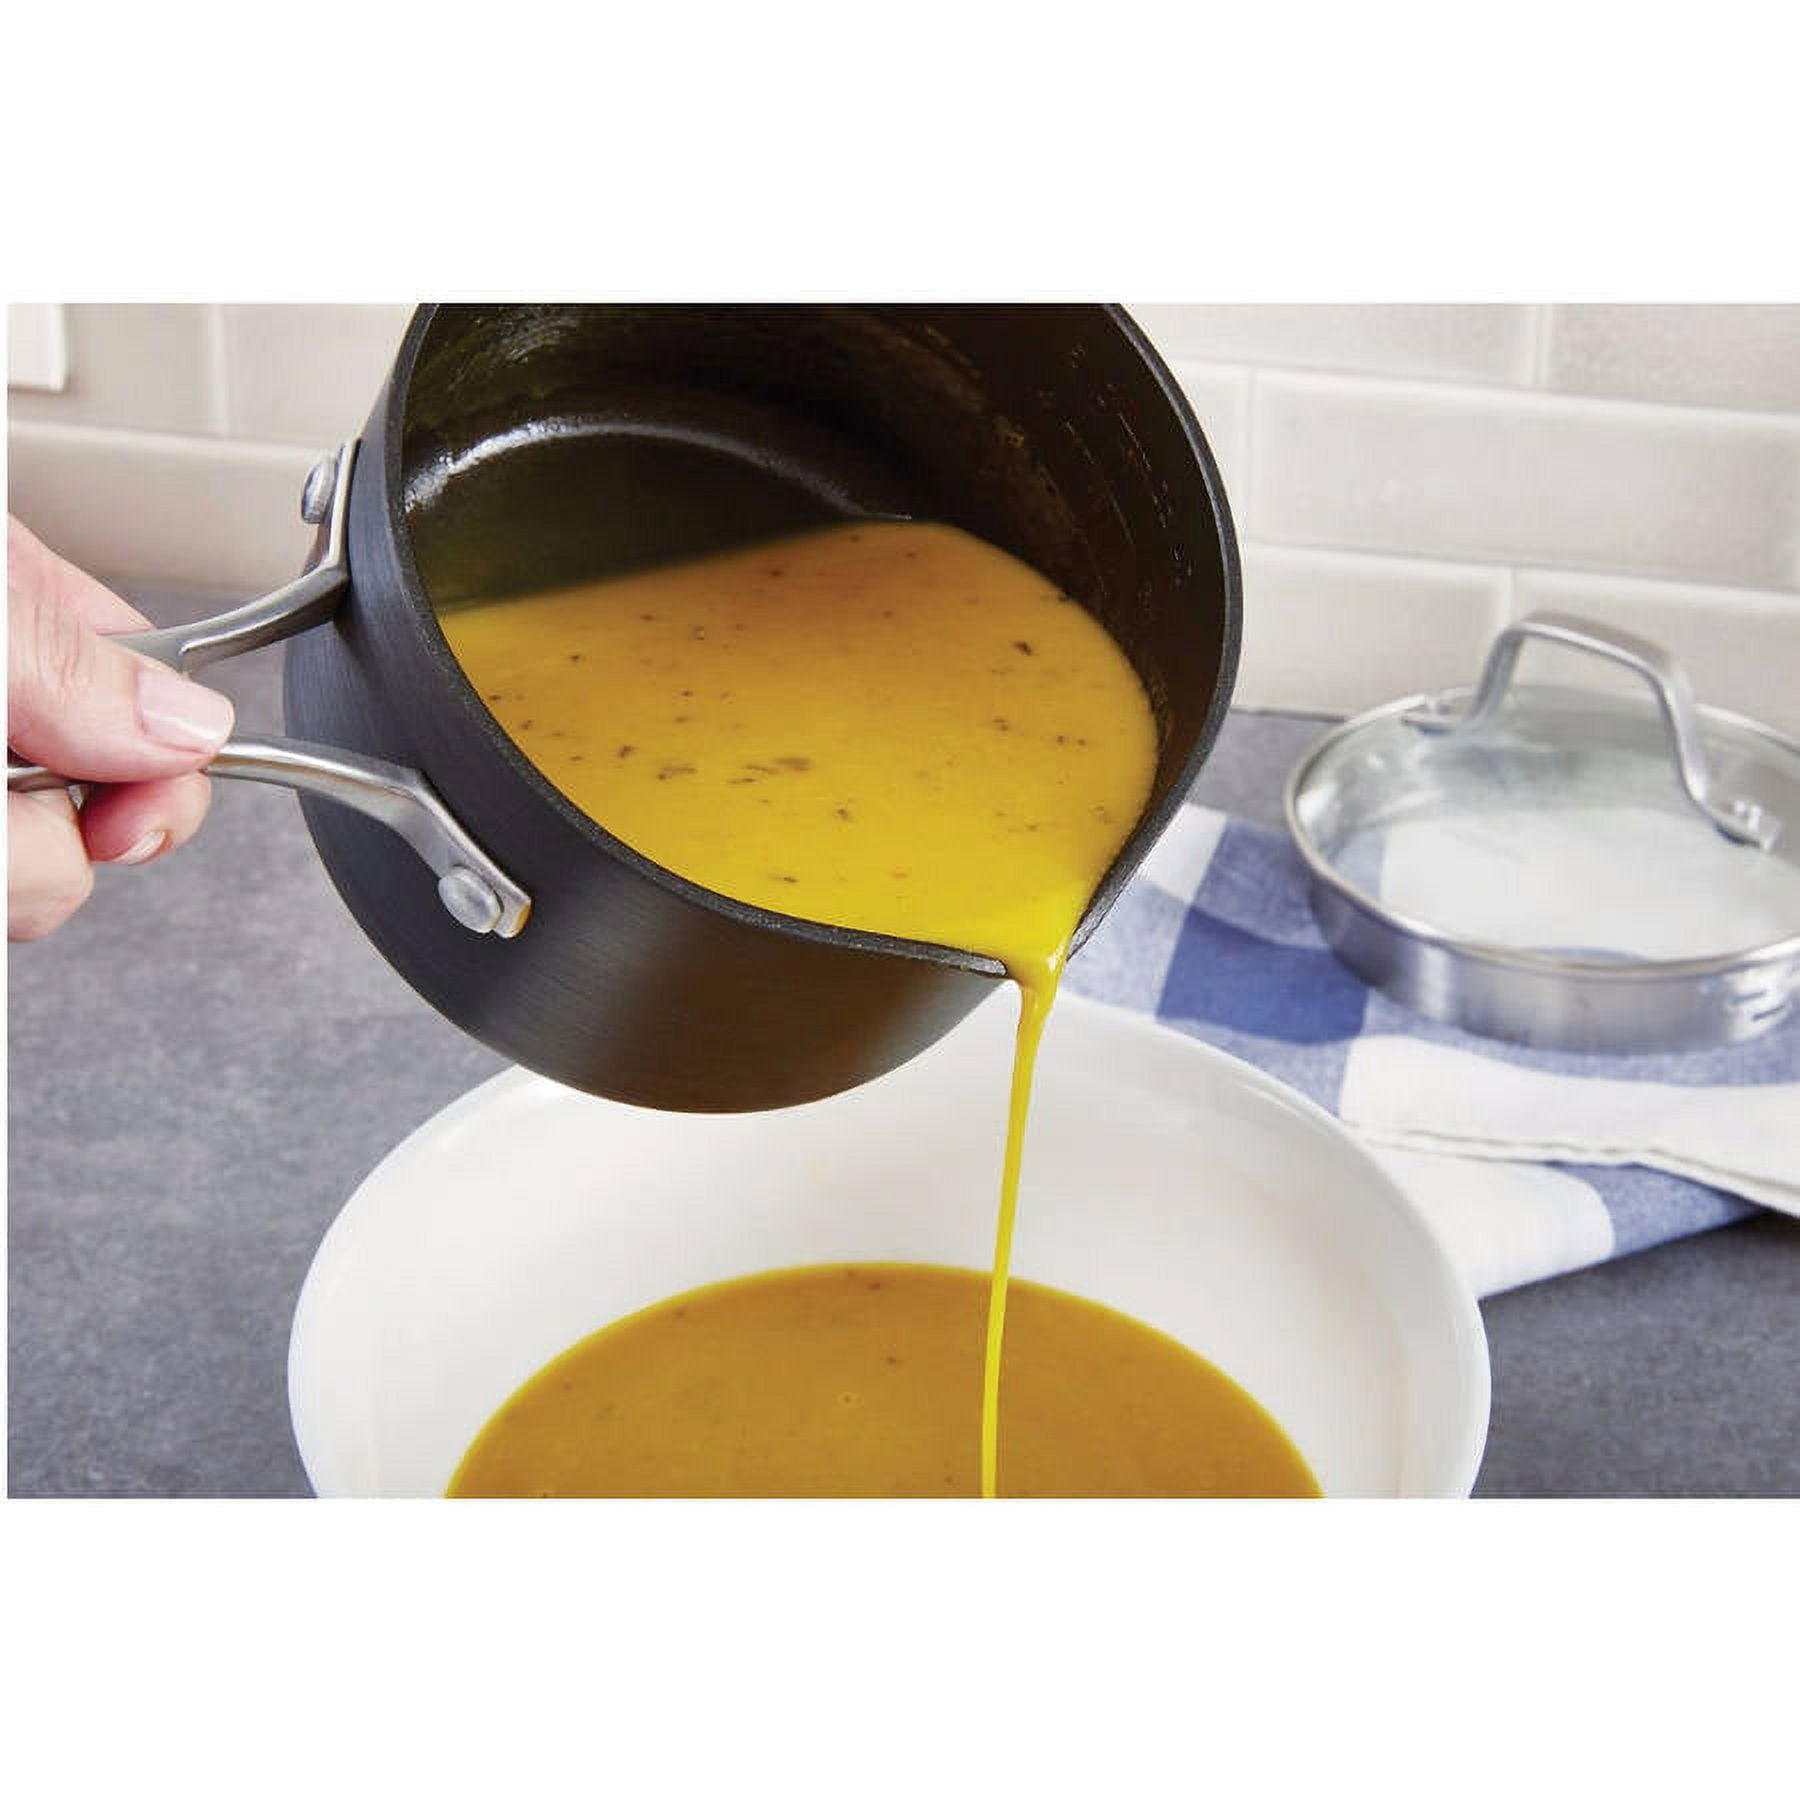 Calphalon Classic 1.5-Quart Sauce Pan: Great Quality and Price